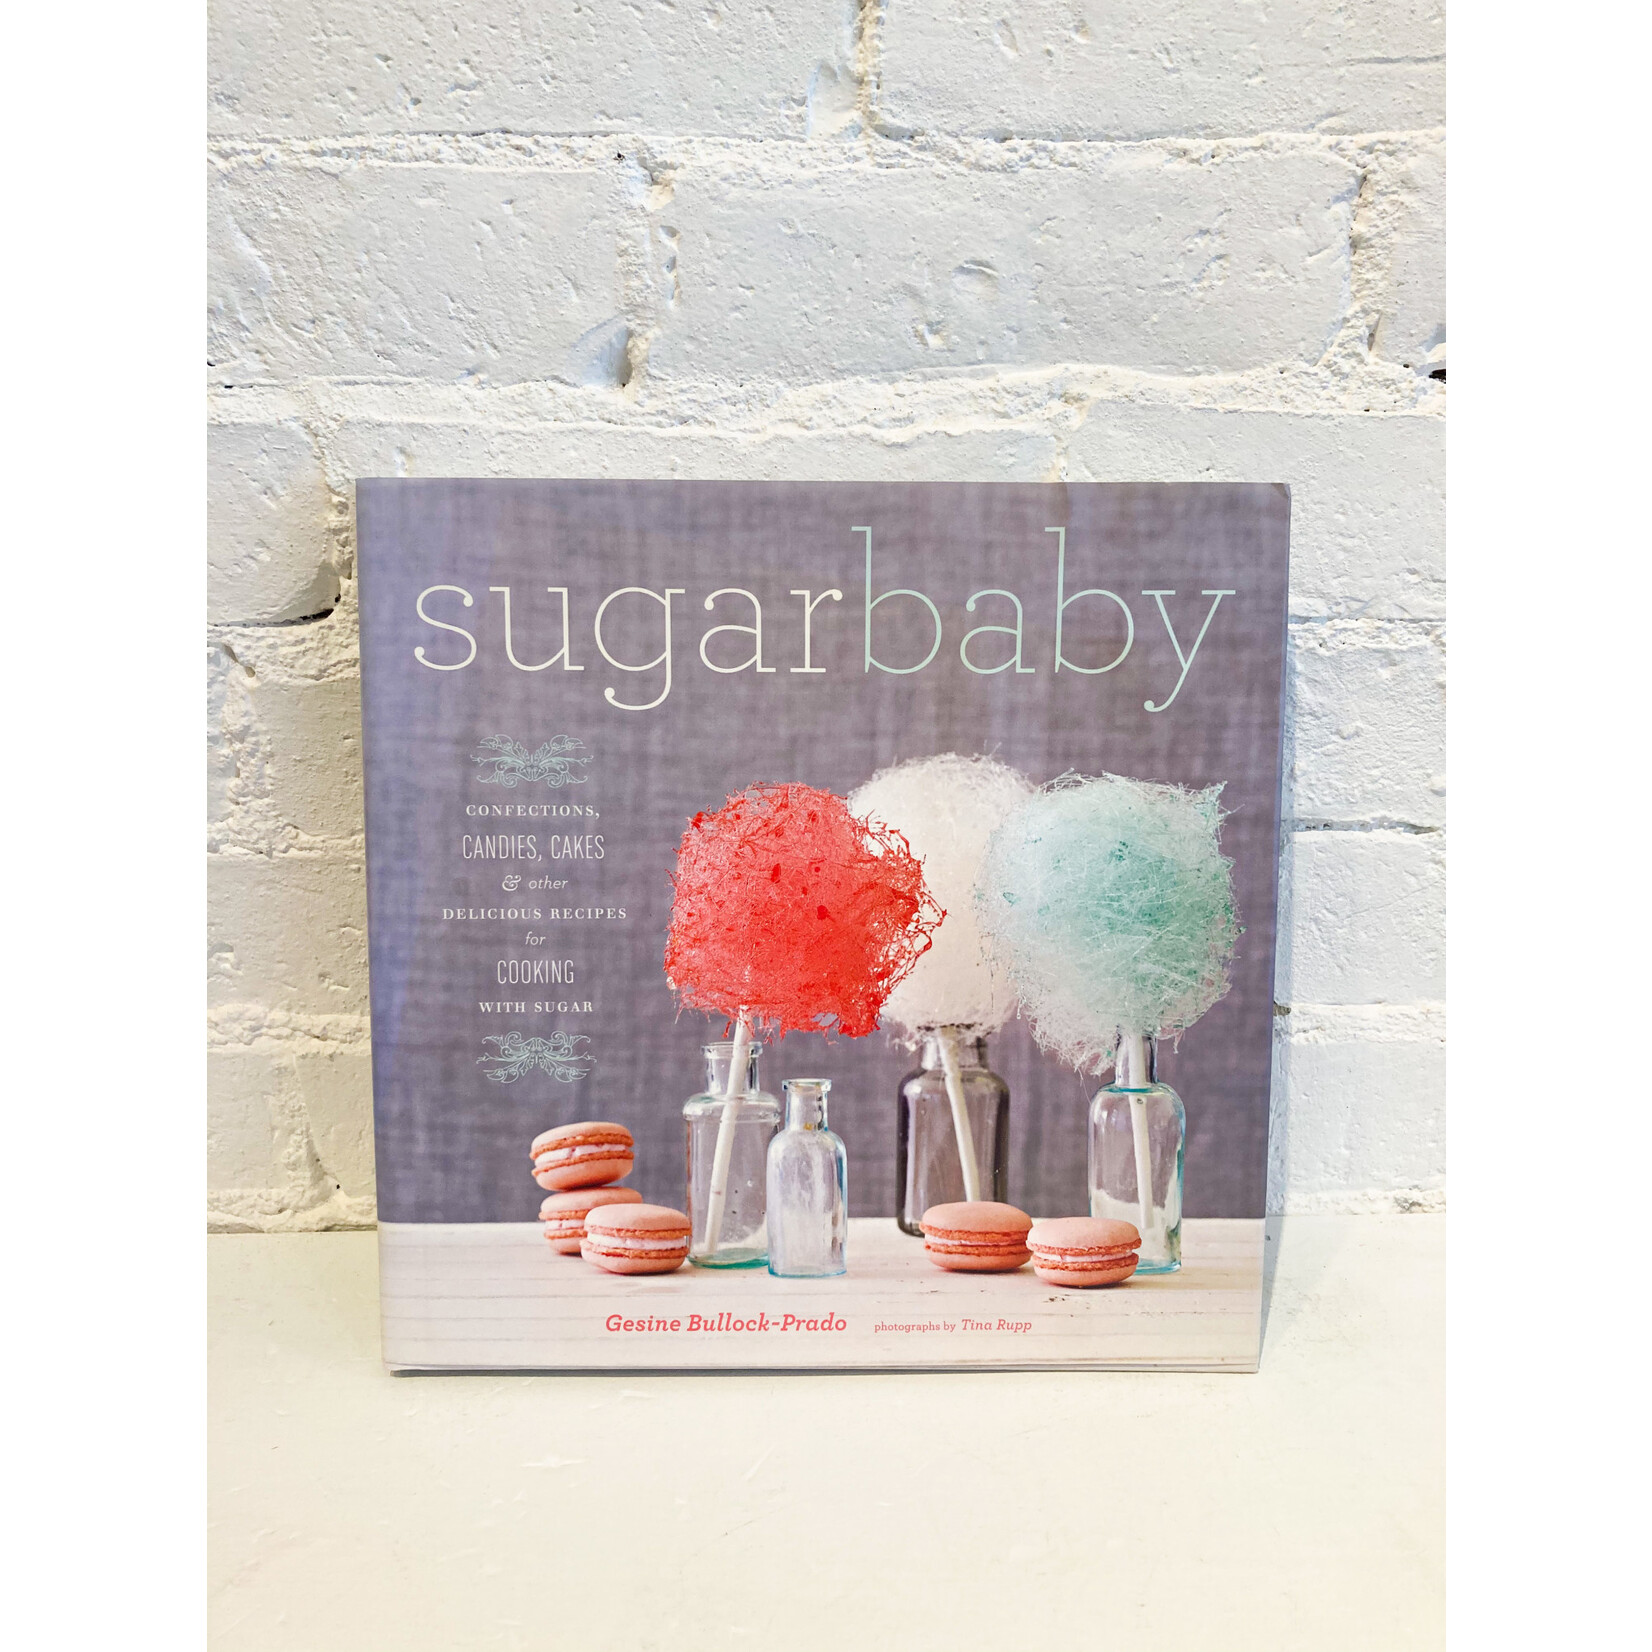 Sugar Baby by Gesine Bullock-Prado